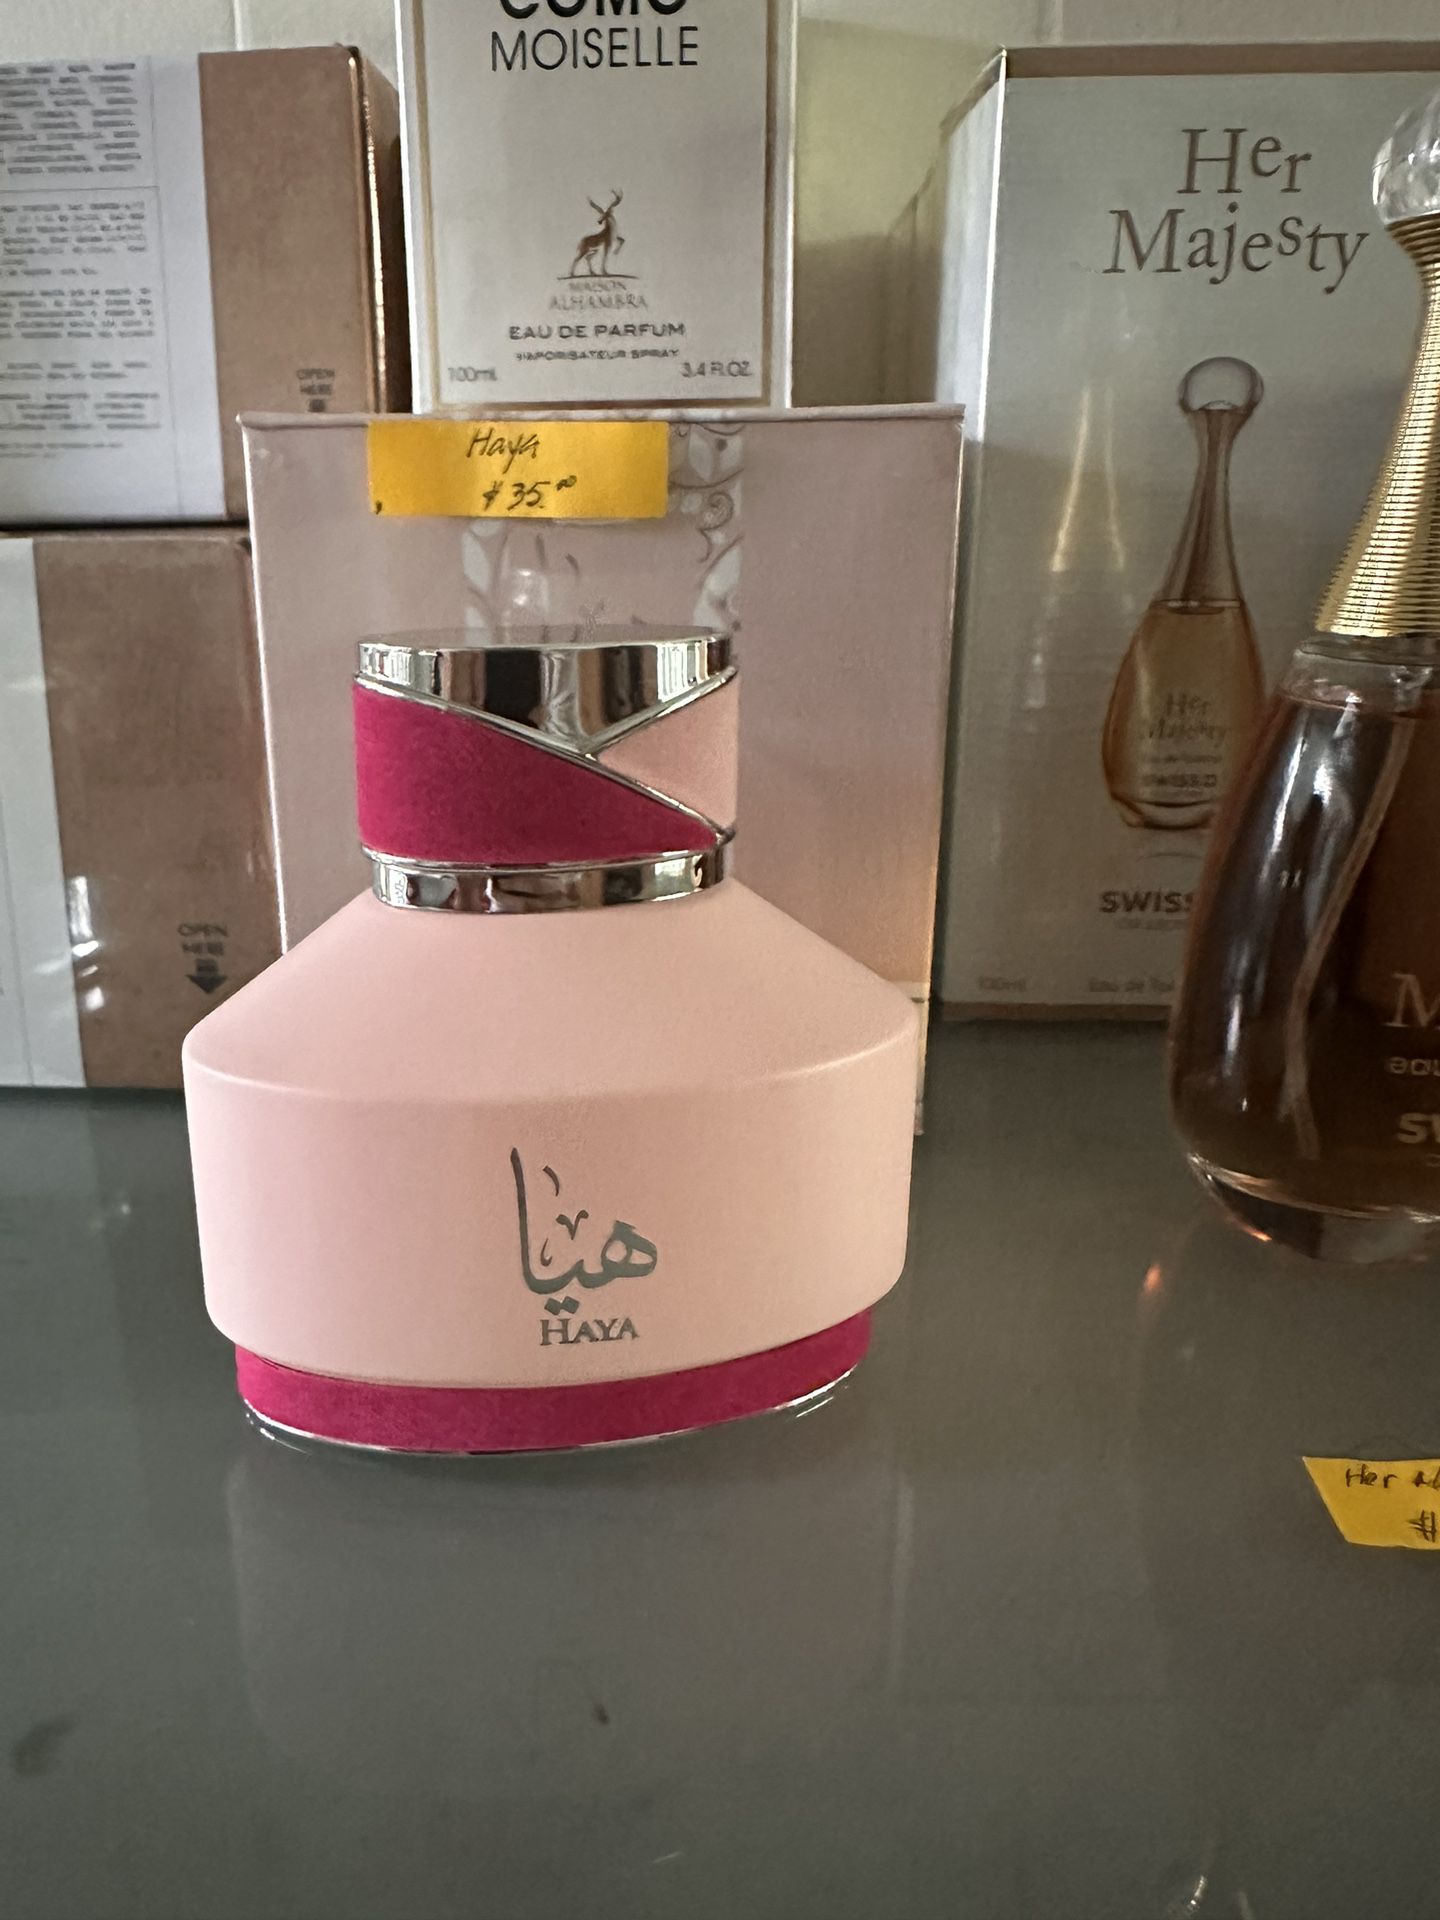 Perfumes Arabes 